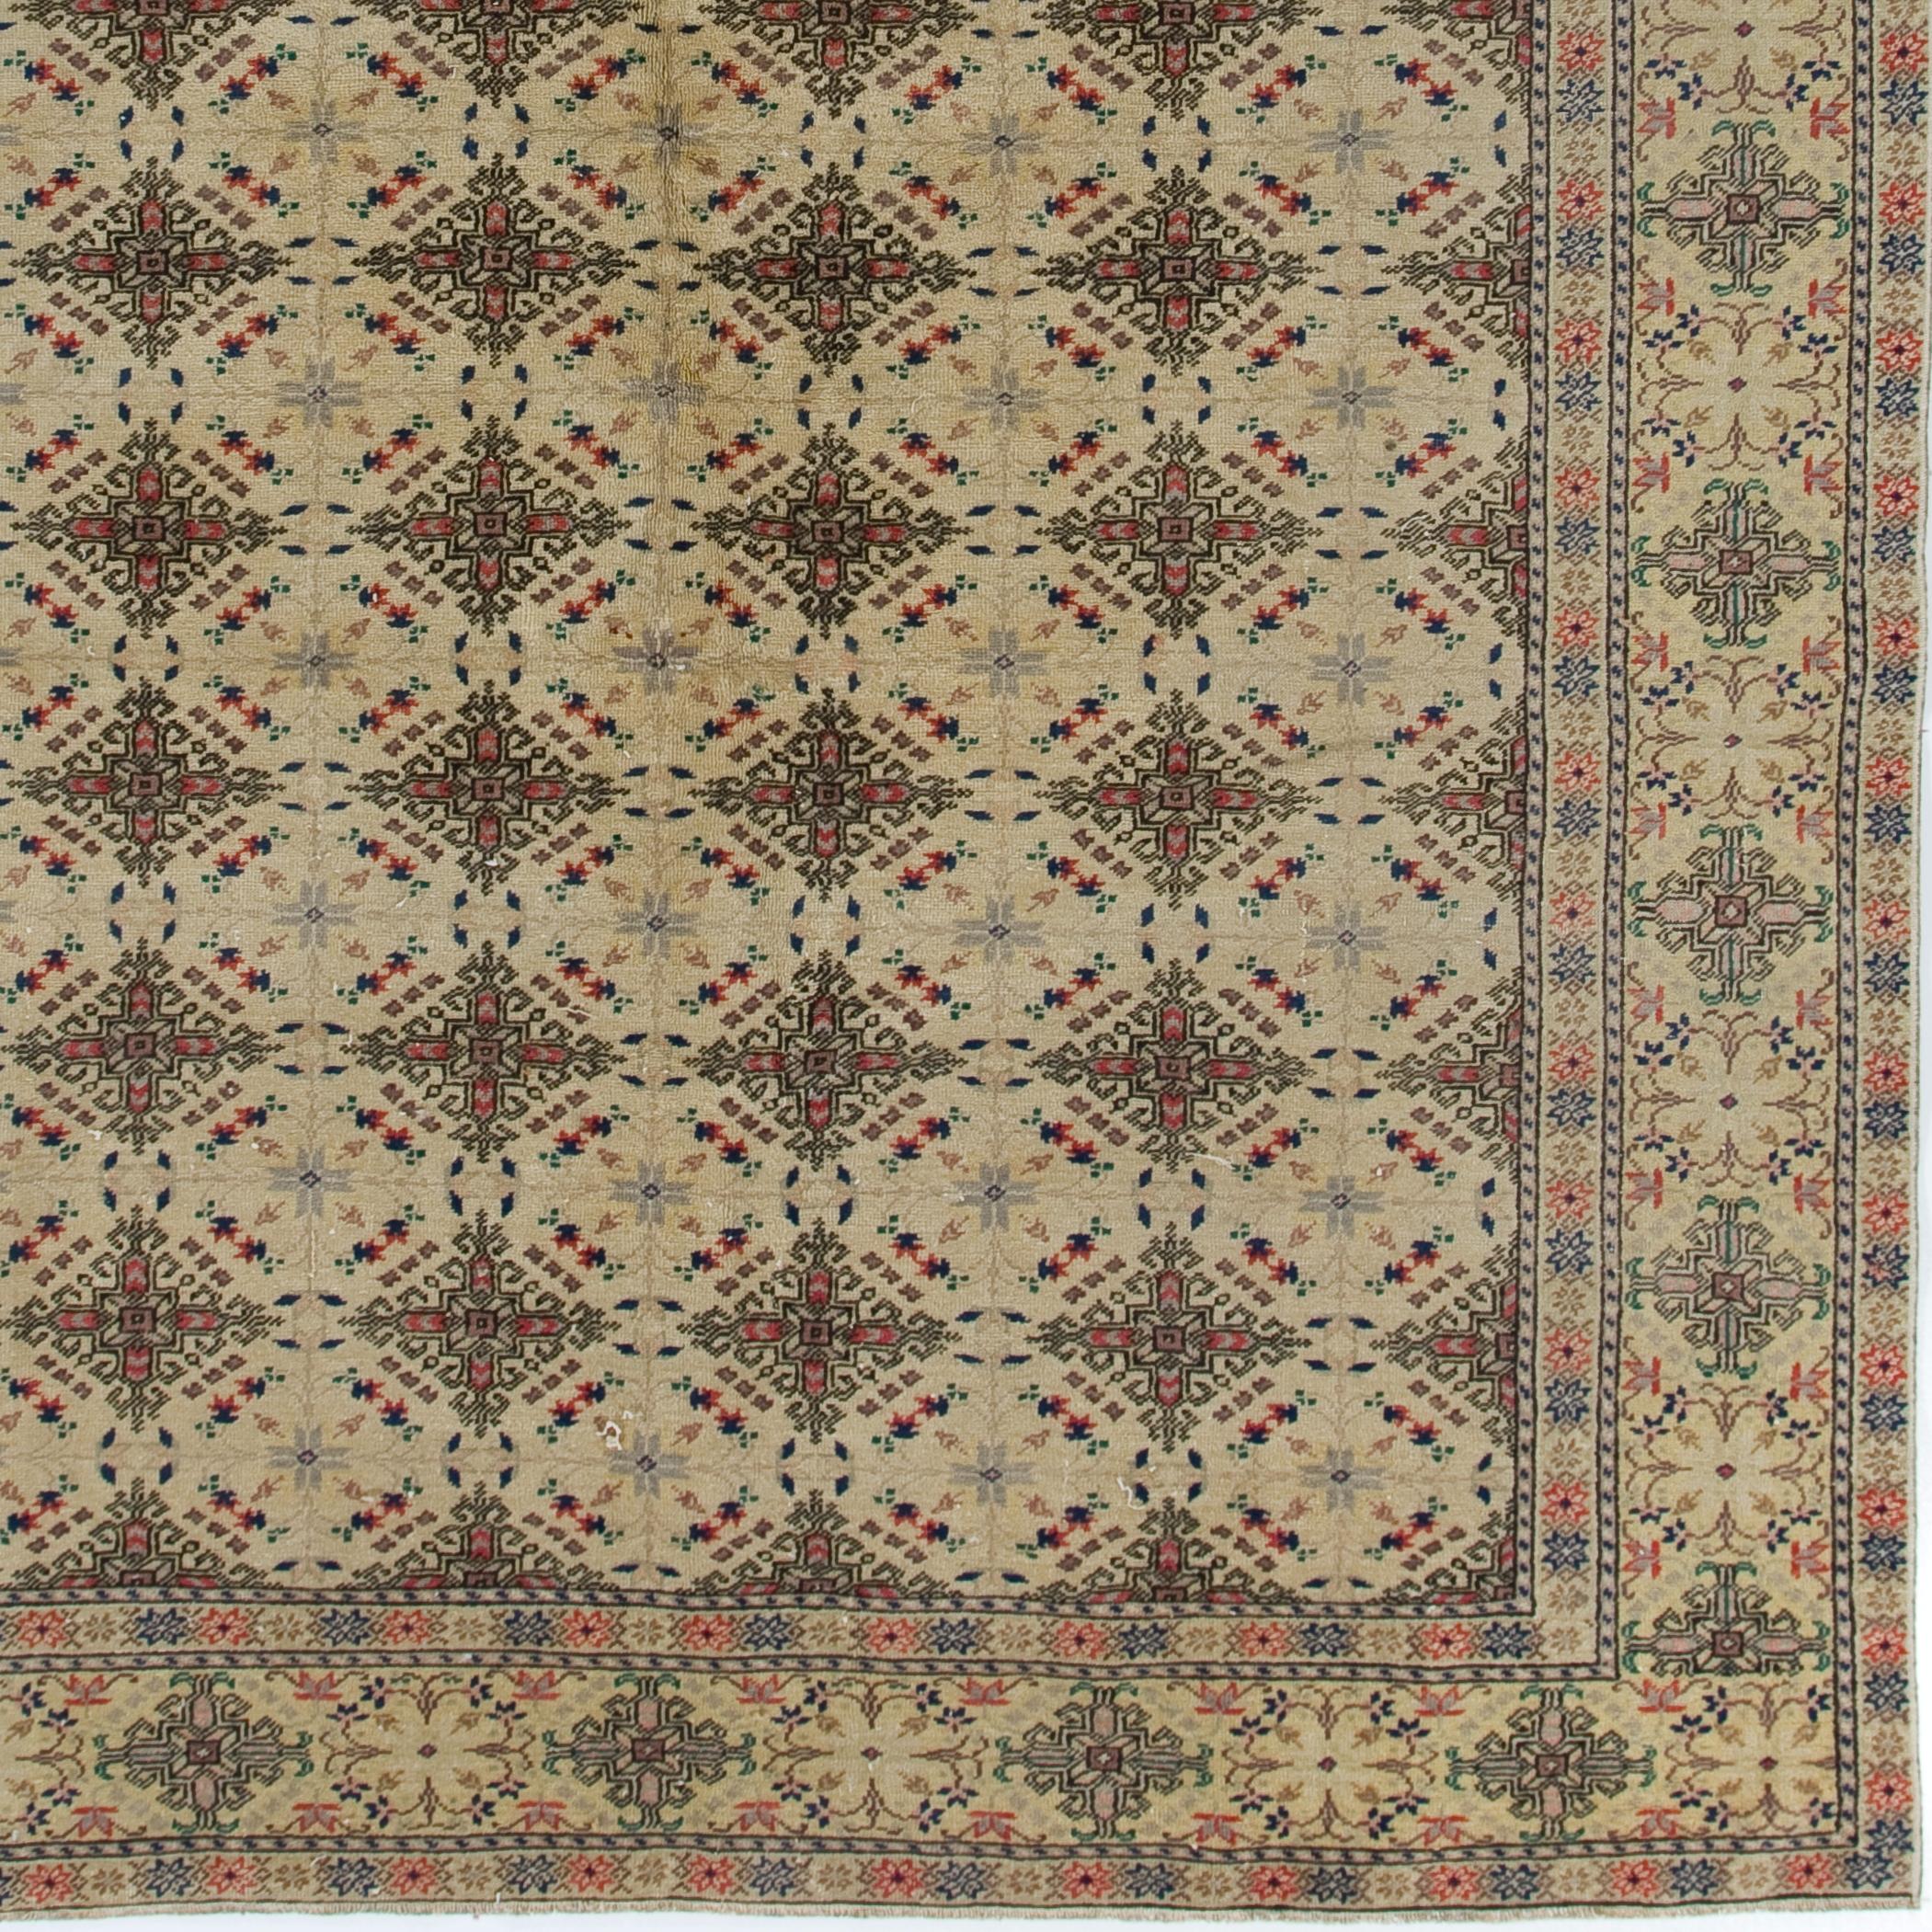 Hand-Woven 6.2x9.5 Ft Vintage Handmade Wool Area Rug from Kayseri / Turkey, Ca 1940 For Sale